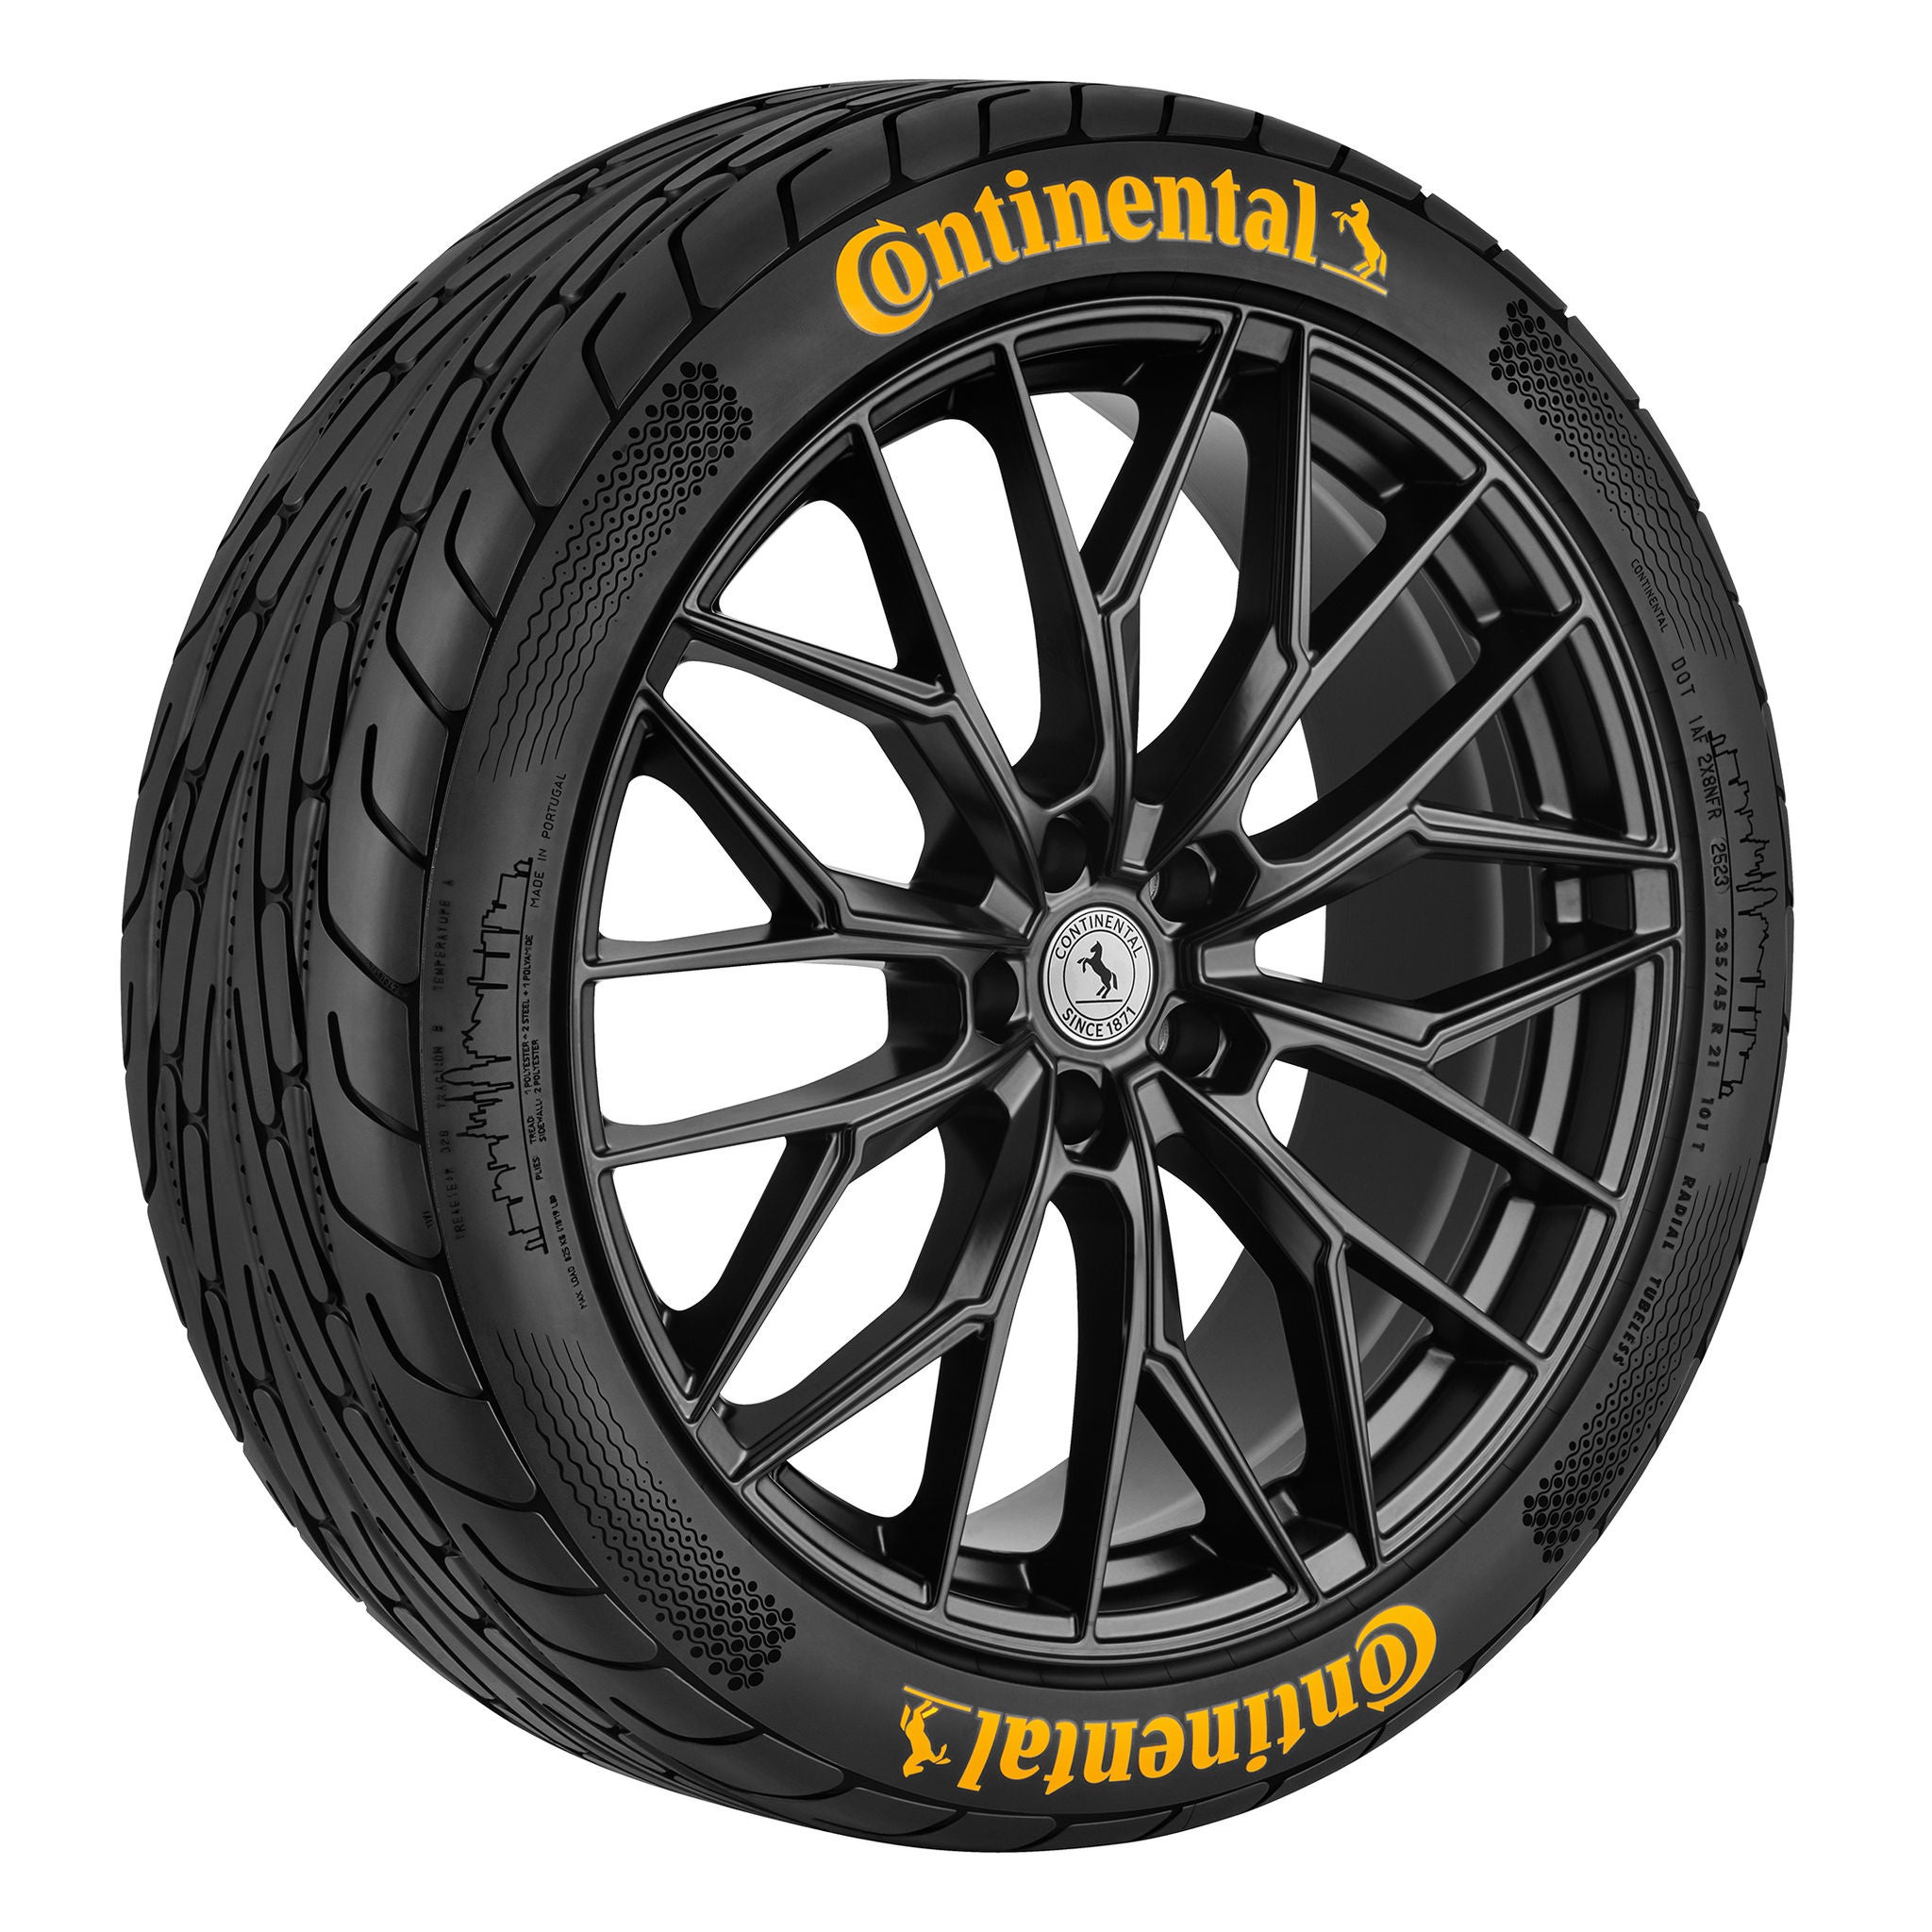 (foto do pneu conceito da Continental: modelo Conti CityPlus)